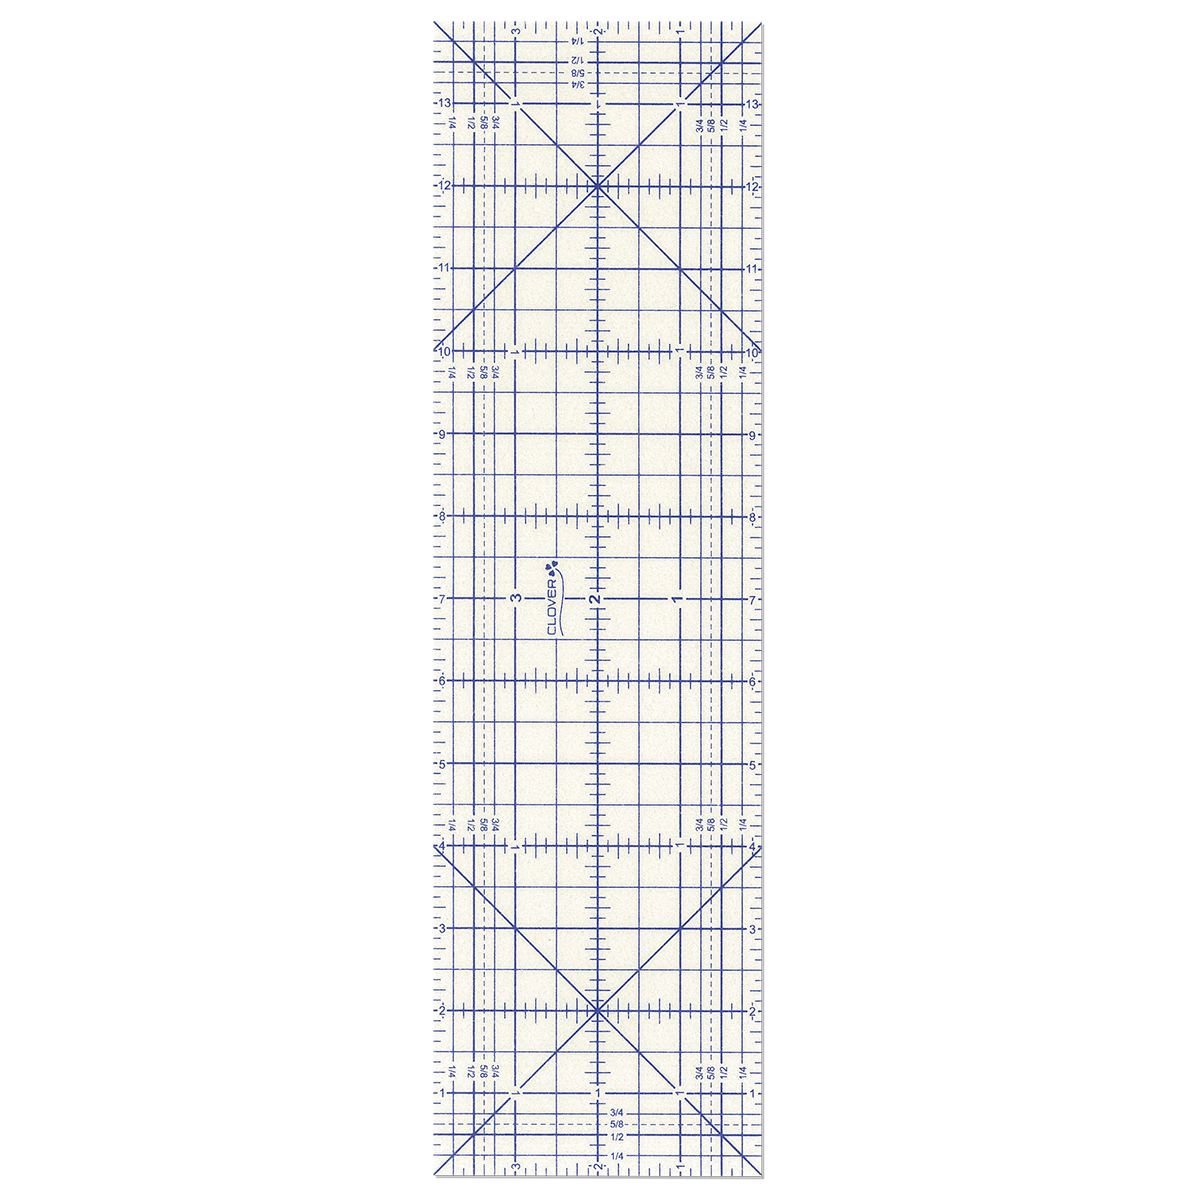 CLV - Hot Ruler (Large) - 0